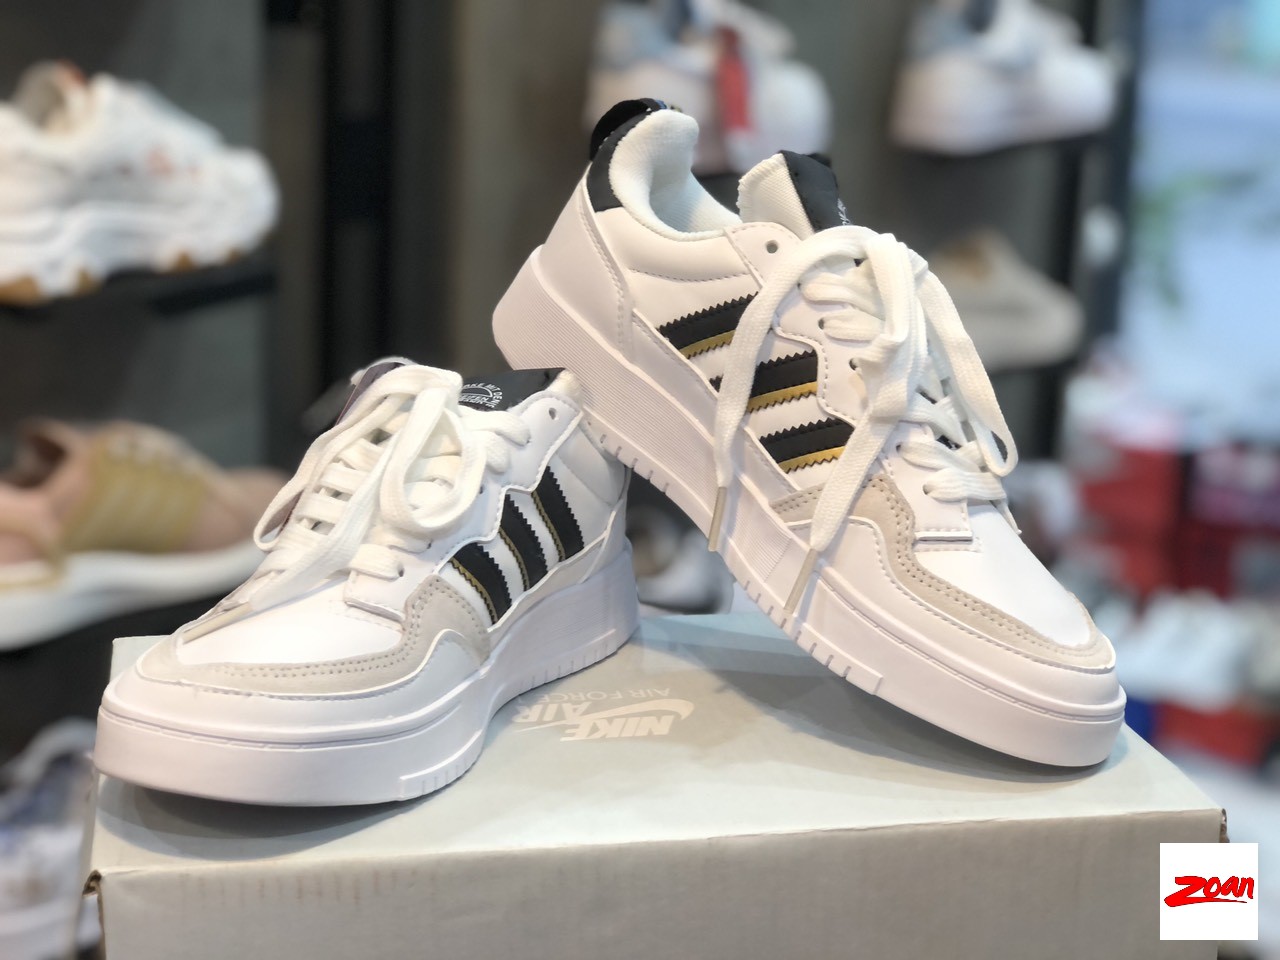 sneaker Adidas Grand Court chất lượng cao, giày zoan